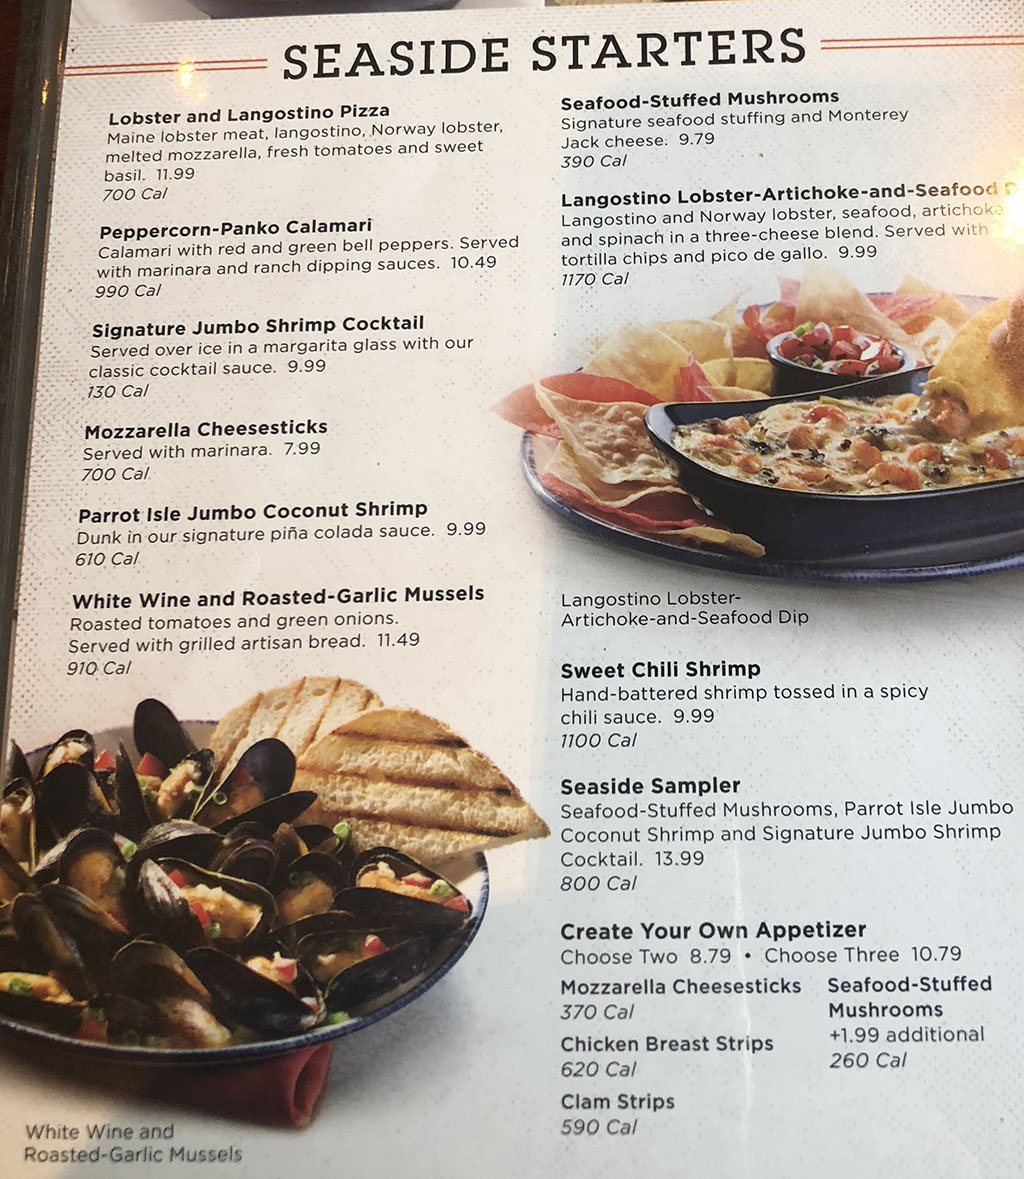 Red lobster menu prices - innobatman